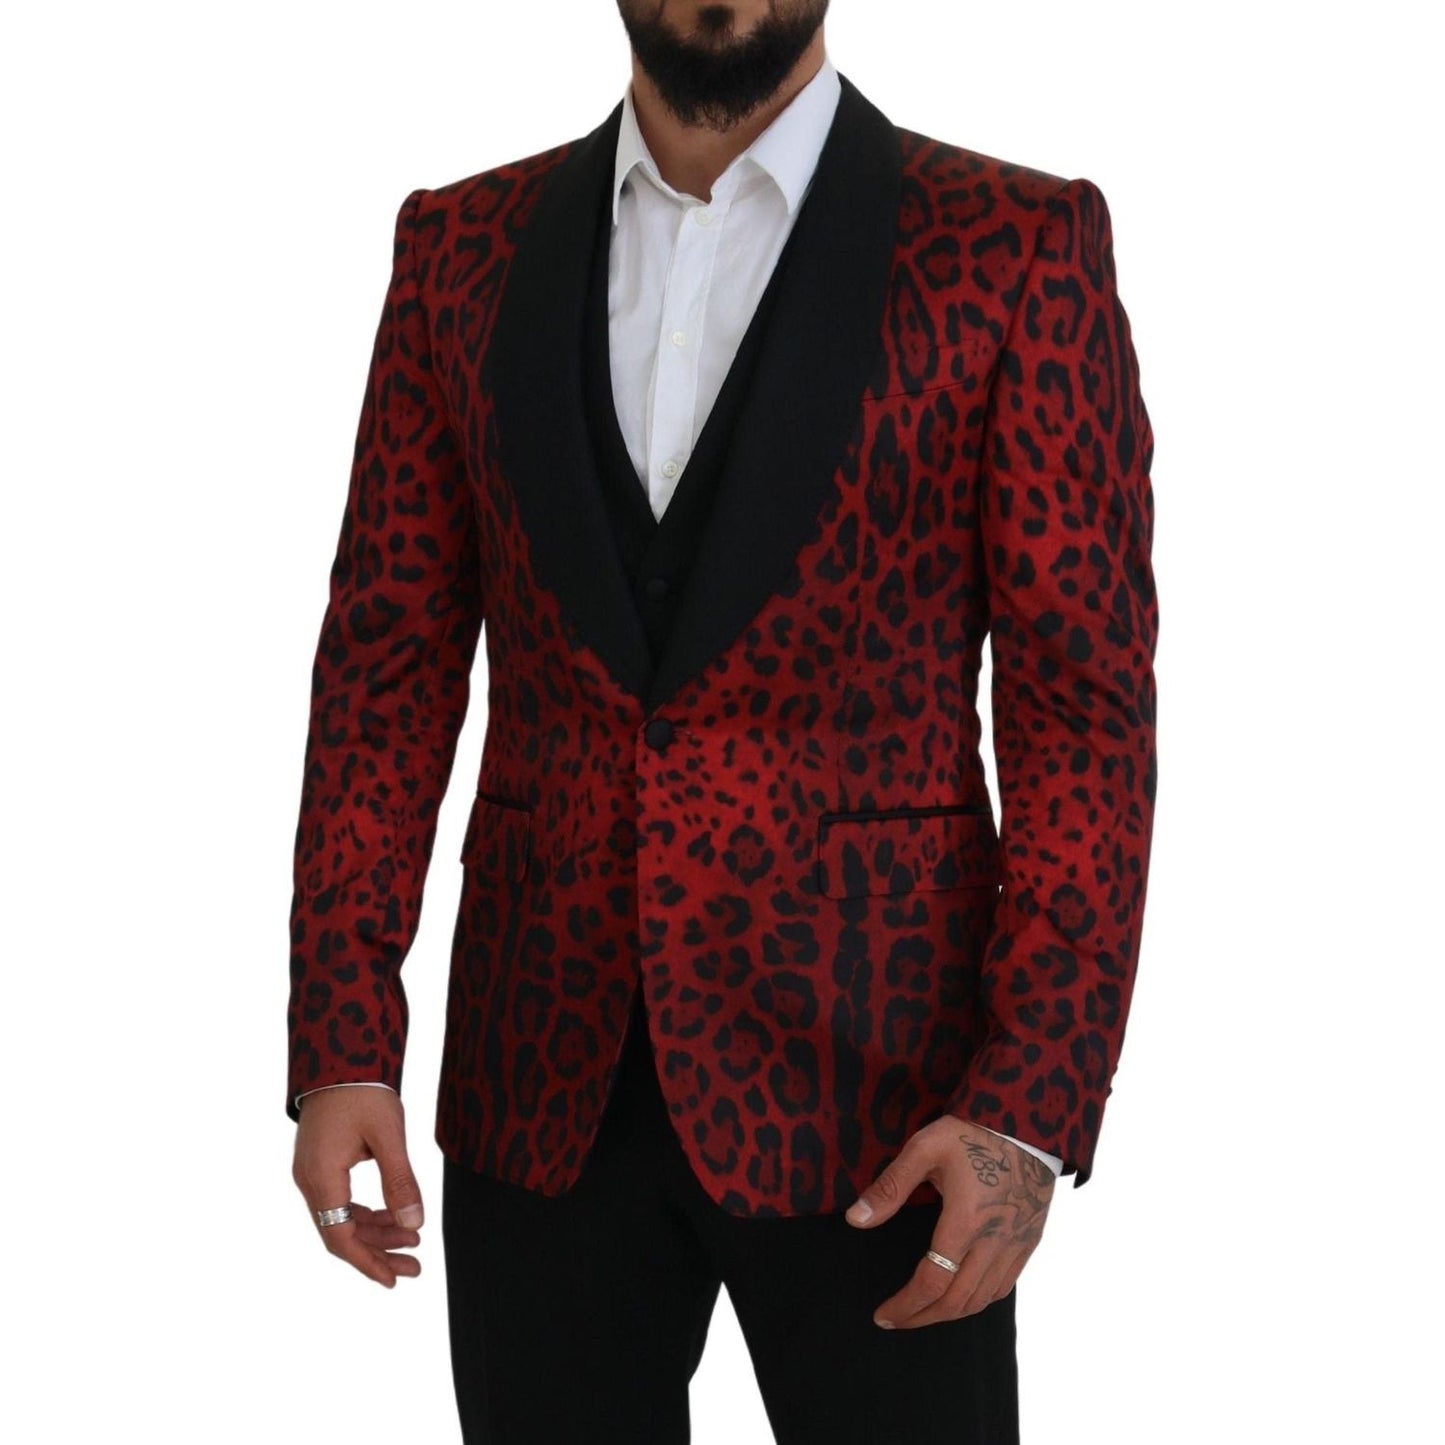 Dolce & Gabbana Radiant Red Leopard Print Three Piece Suit red-sicilia-leopard-formal-3-piece-set-suit